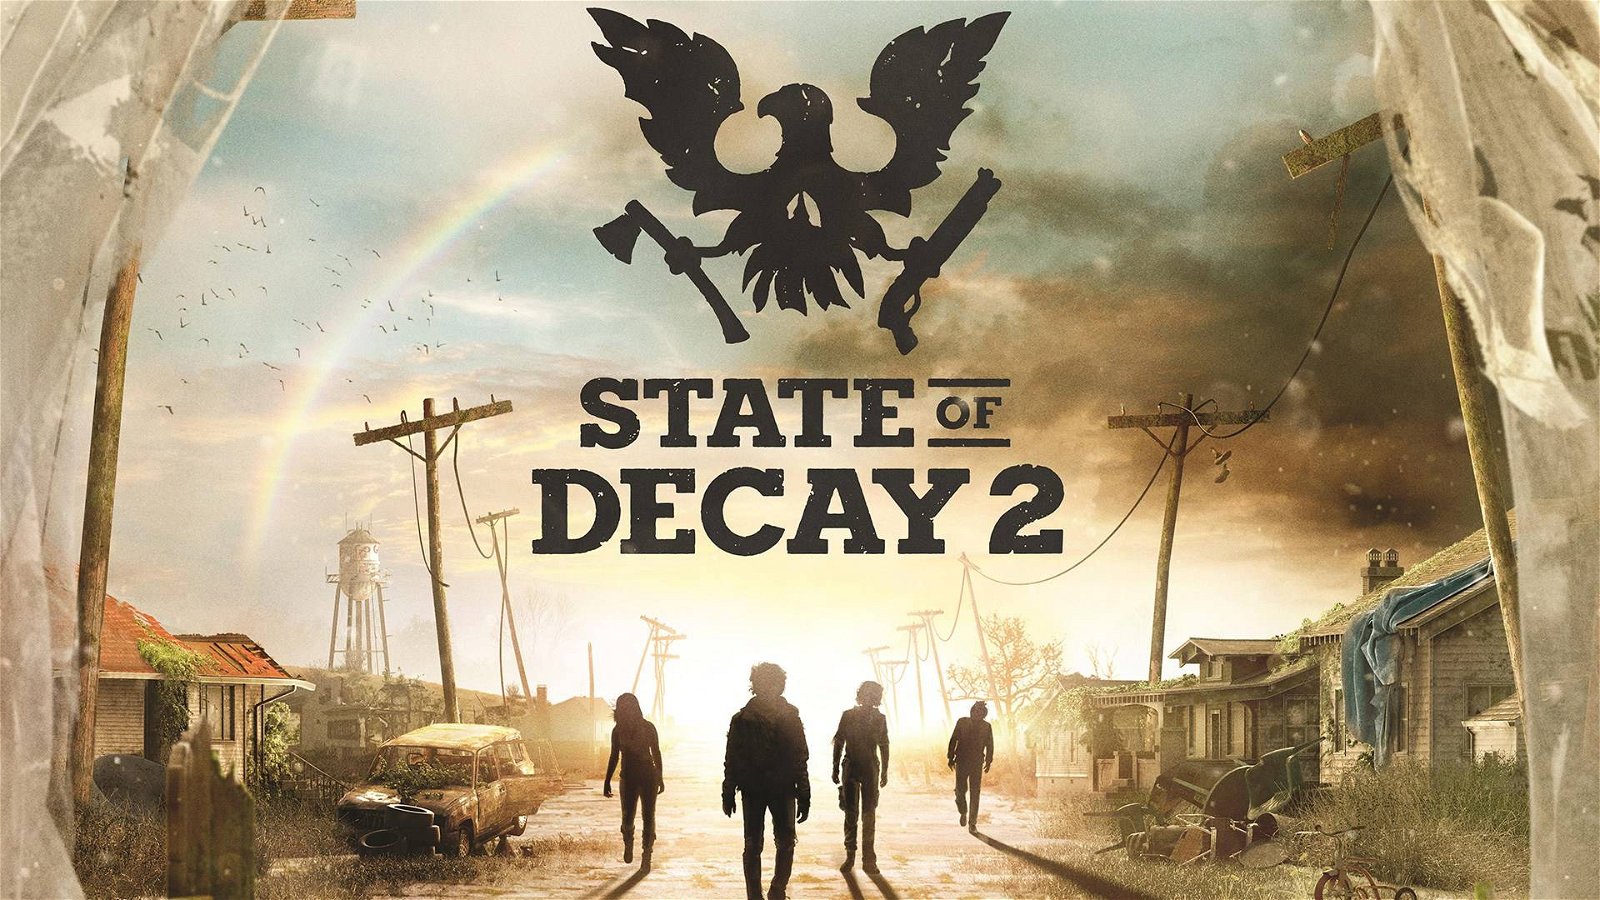 Immagine di State of Decay 2 arriva su Steam: requisiti di sistema e periodo di uscita svelati